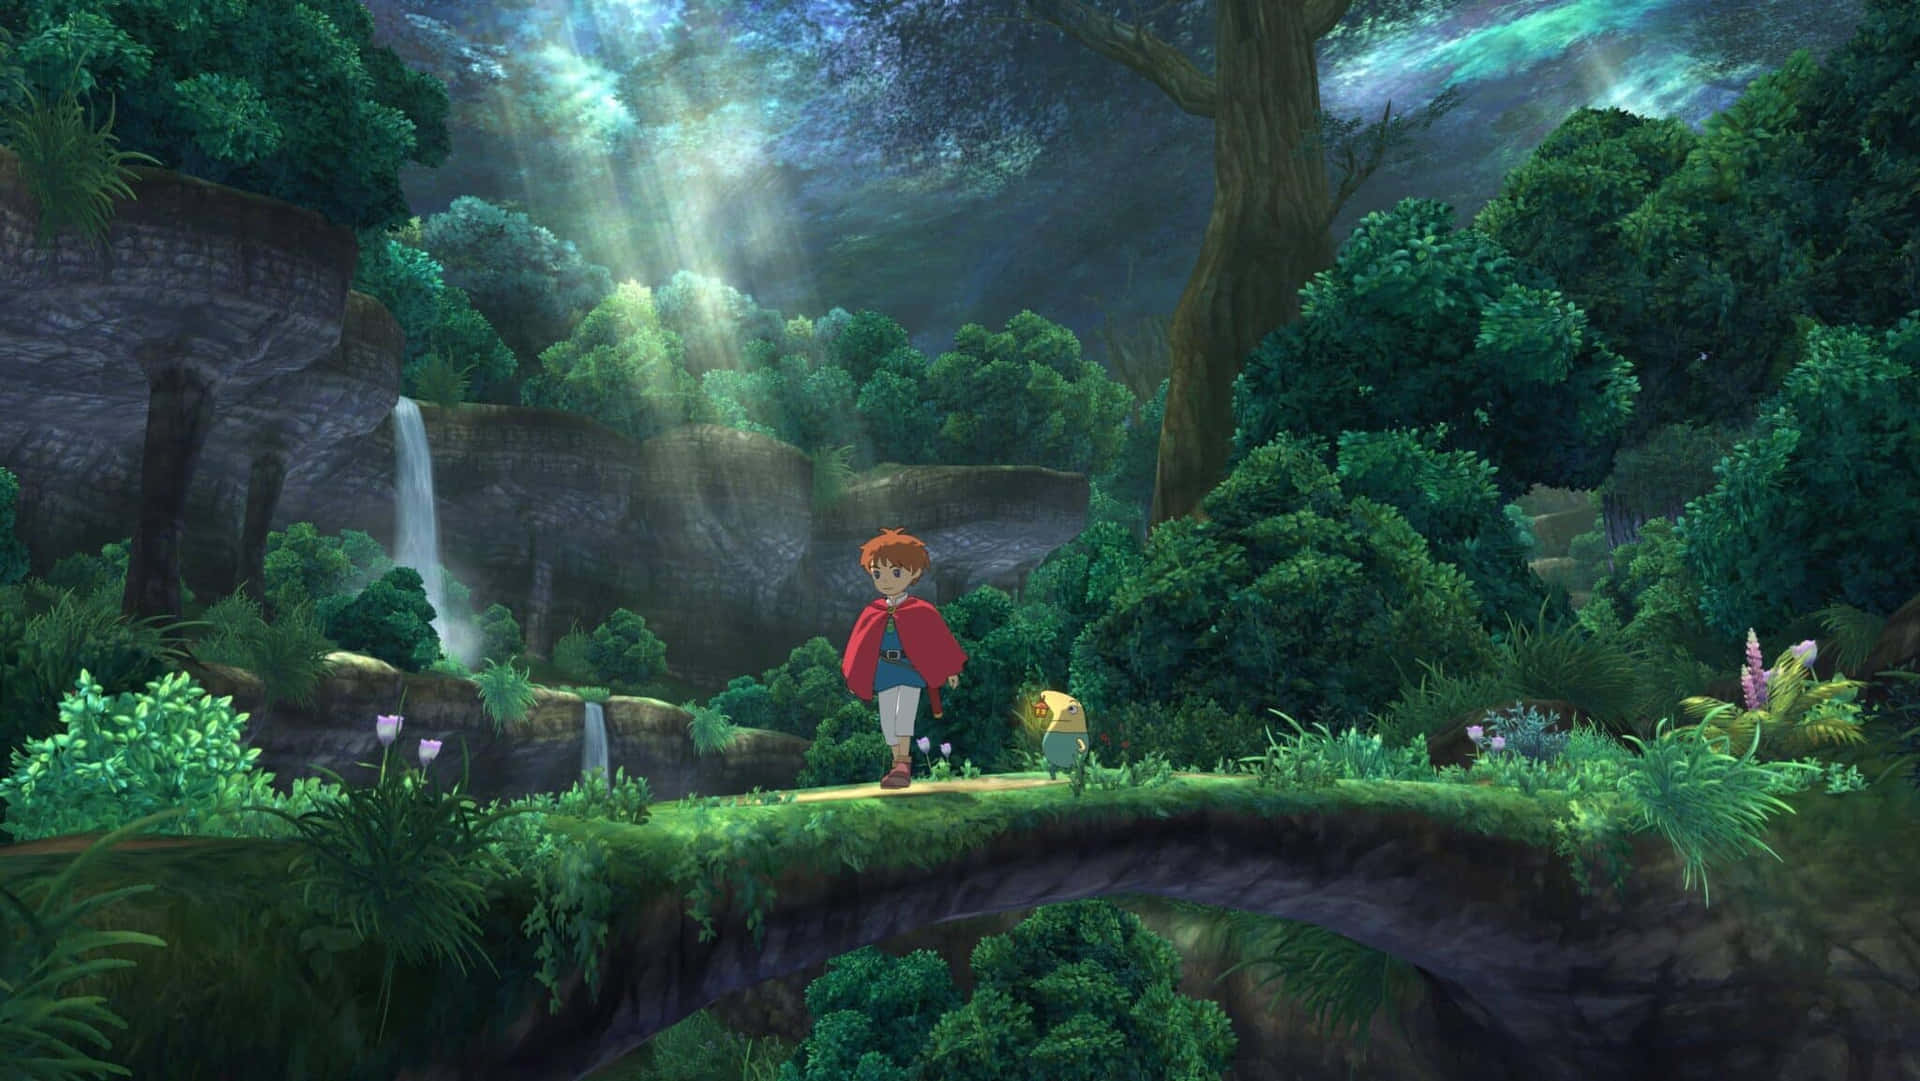 Enchanted Forest Bridge Ghibli Scene Wallpaper